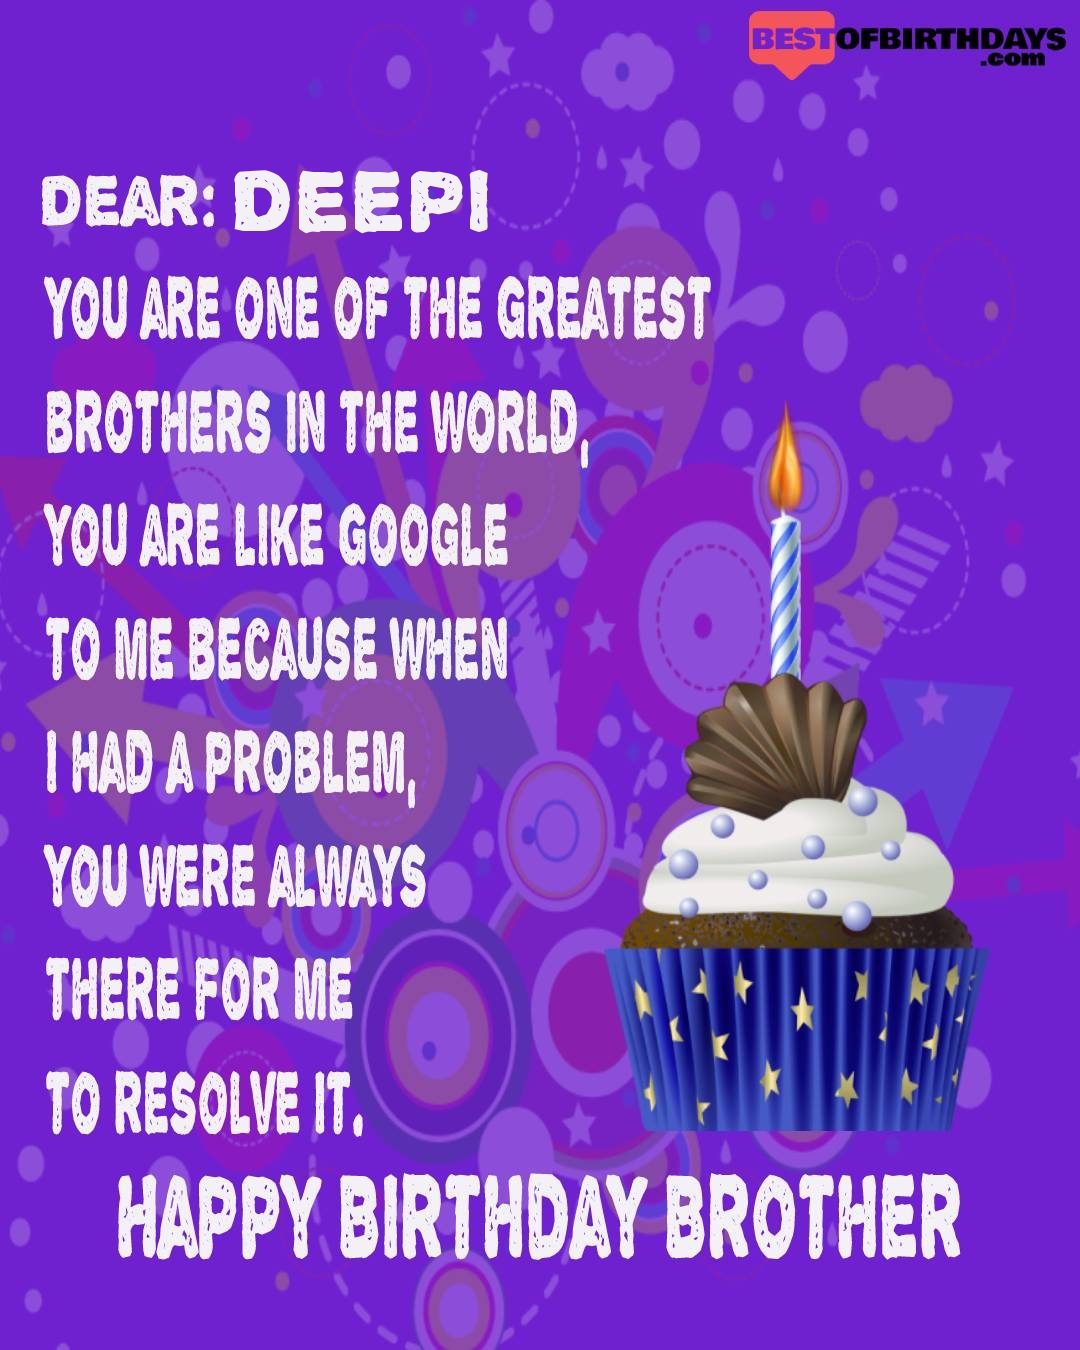 Happy birthday deepi bhai brother bro